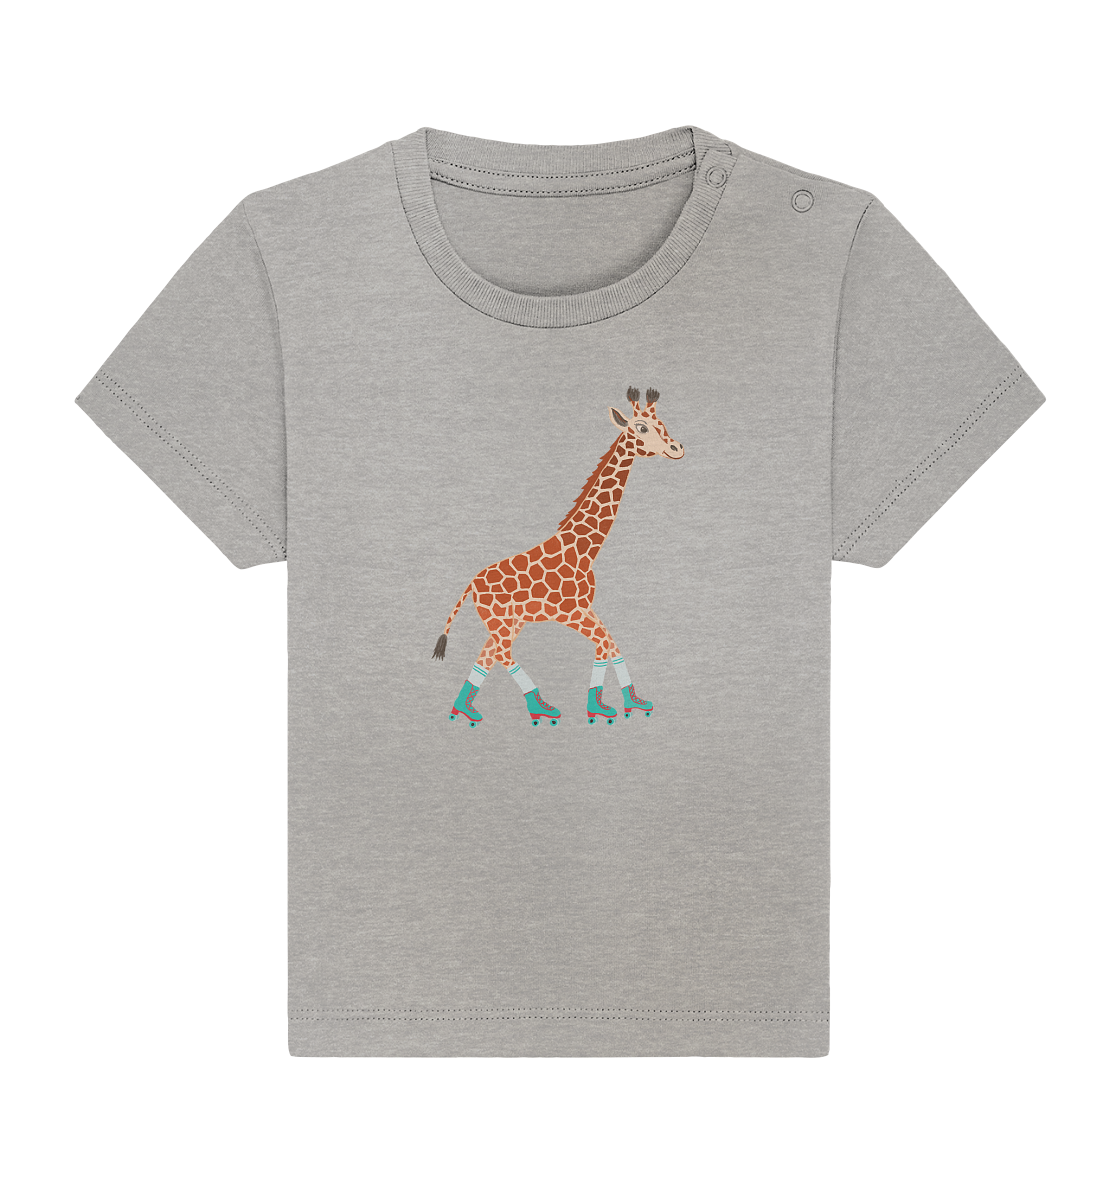 Baby Shirt "Giraffe"